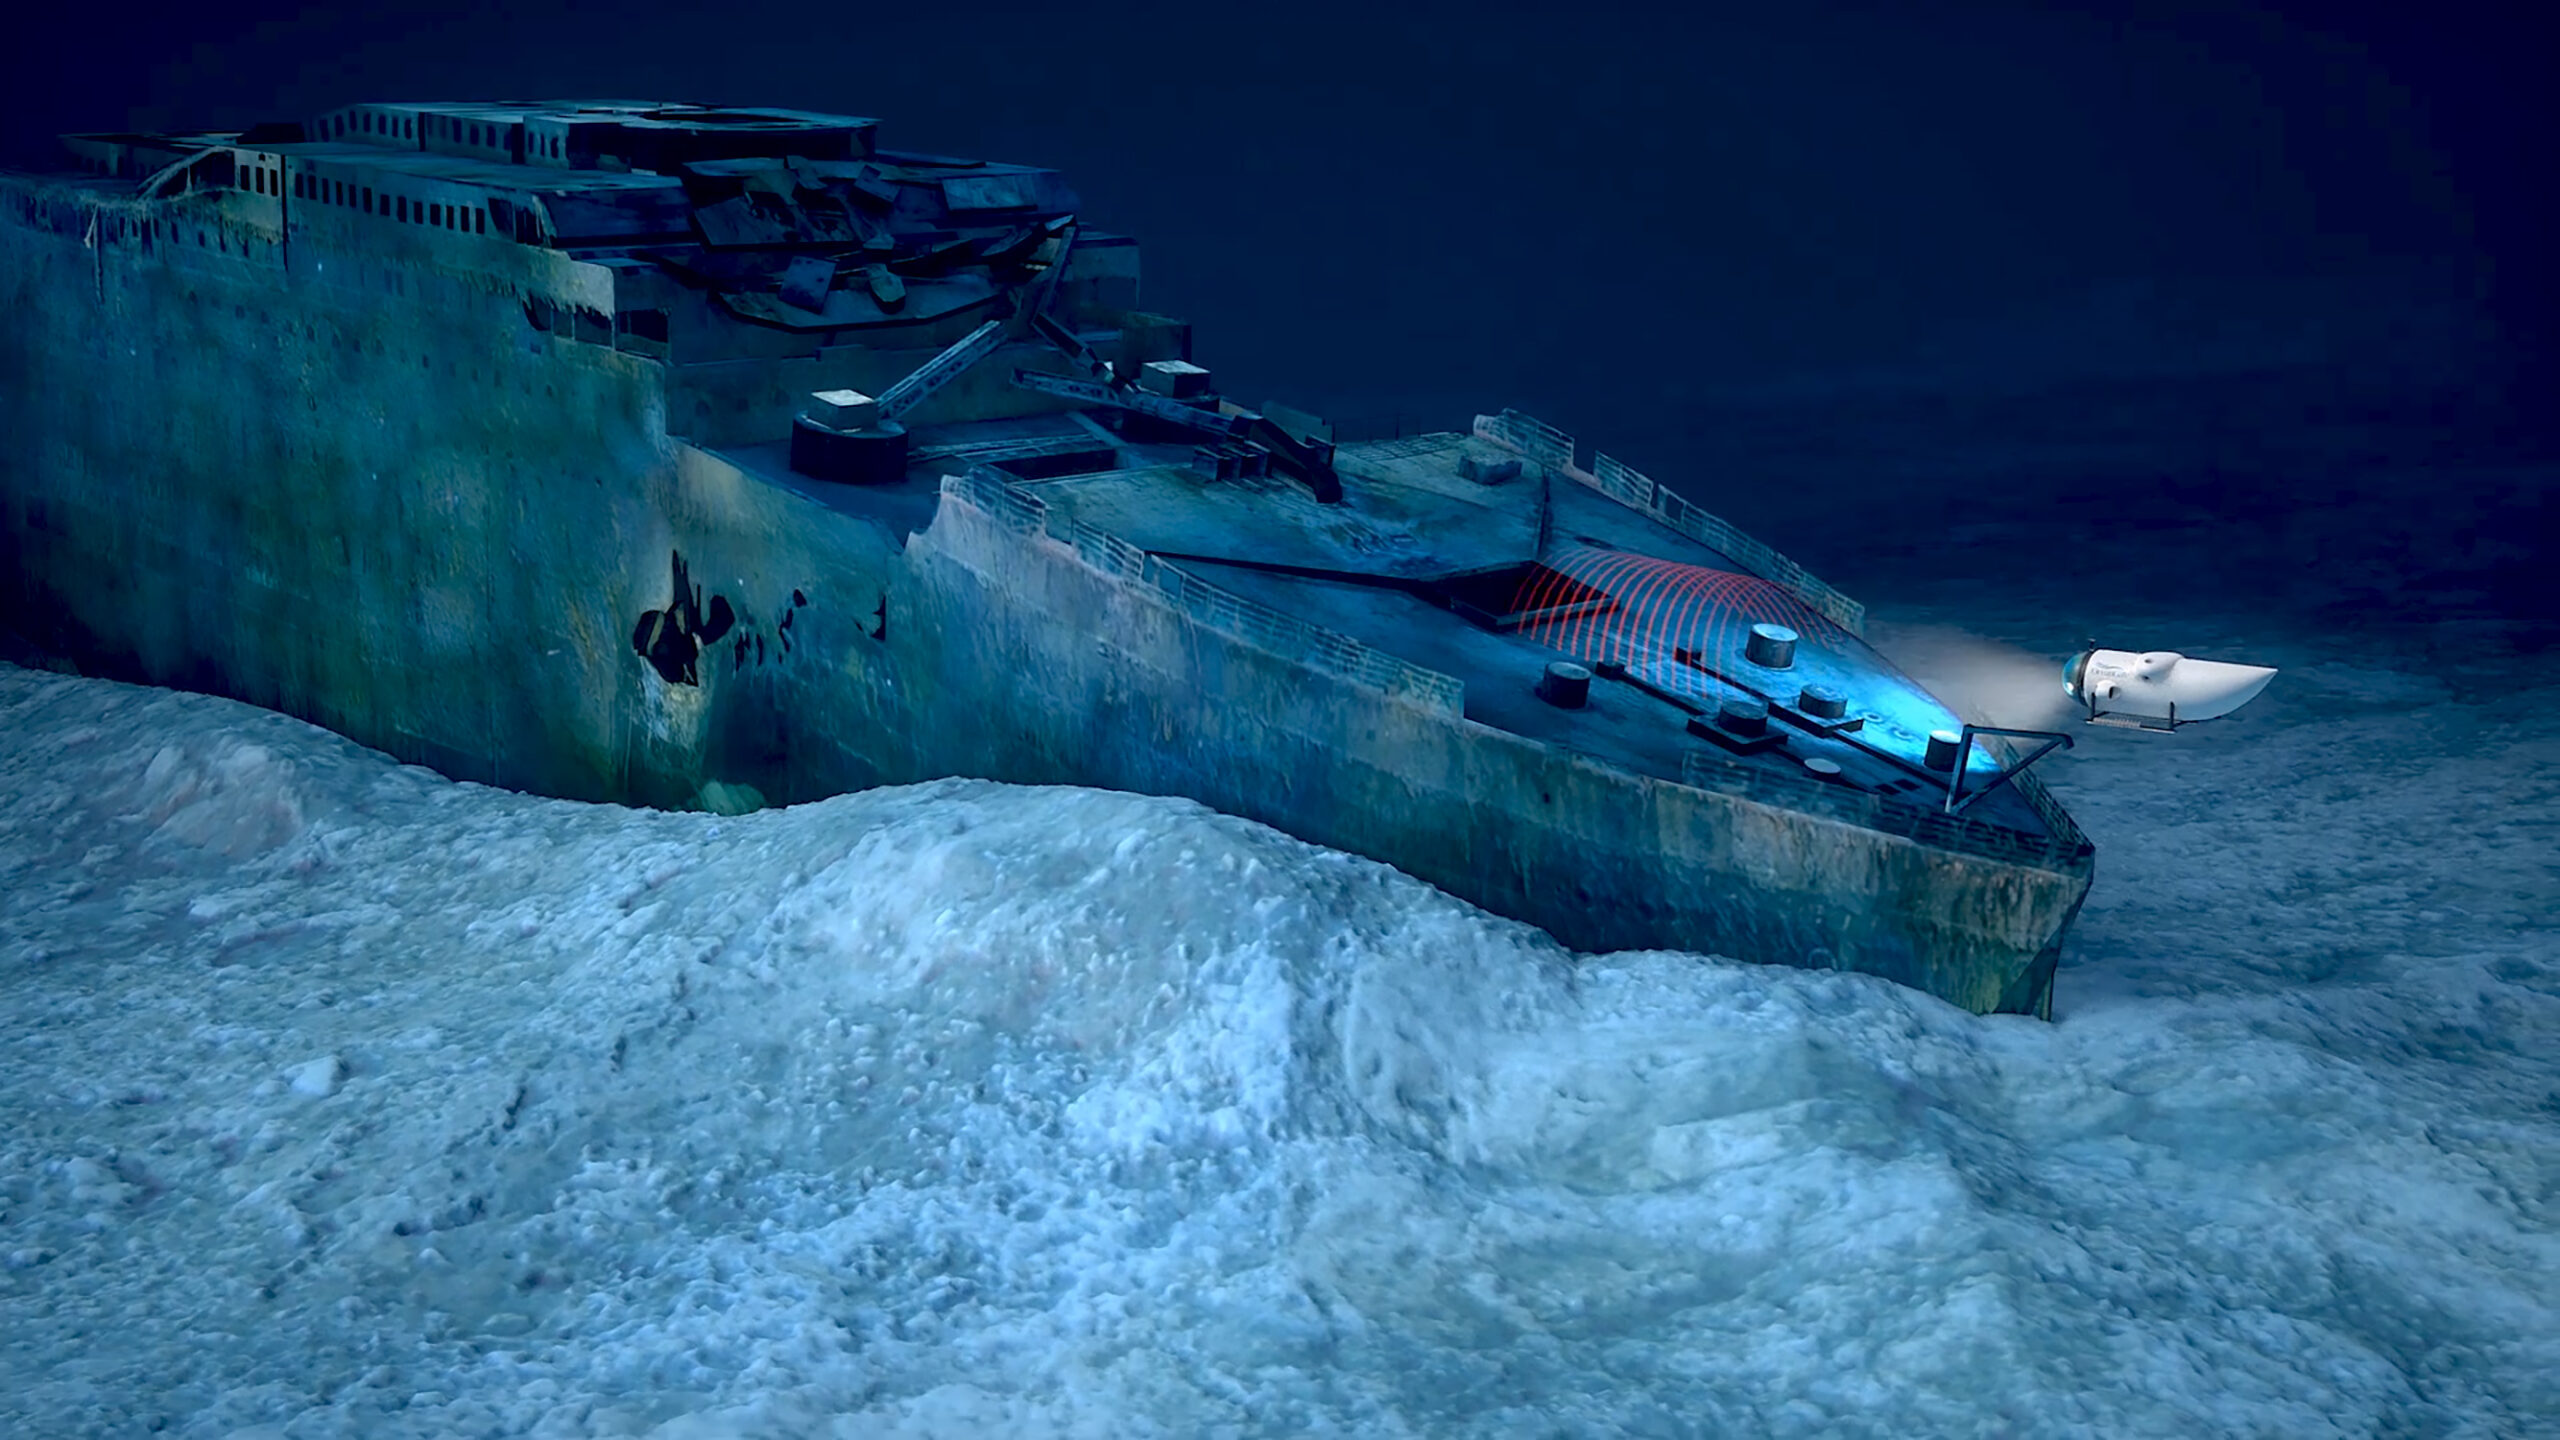 image: Titanic illustration.